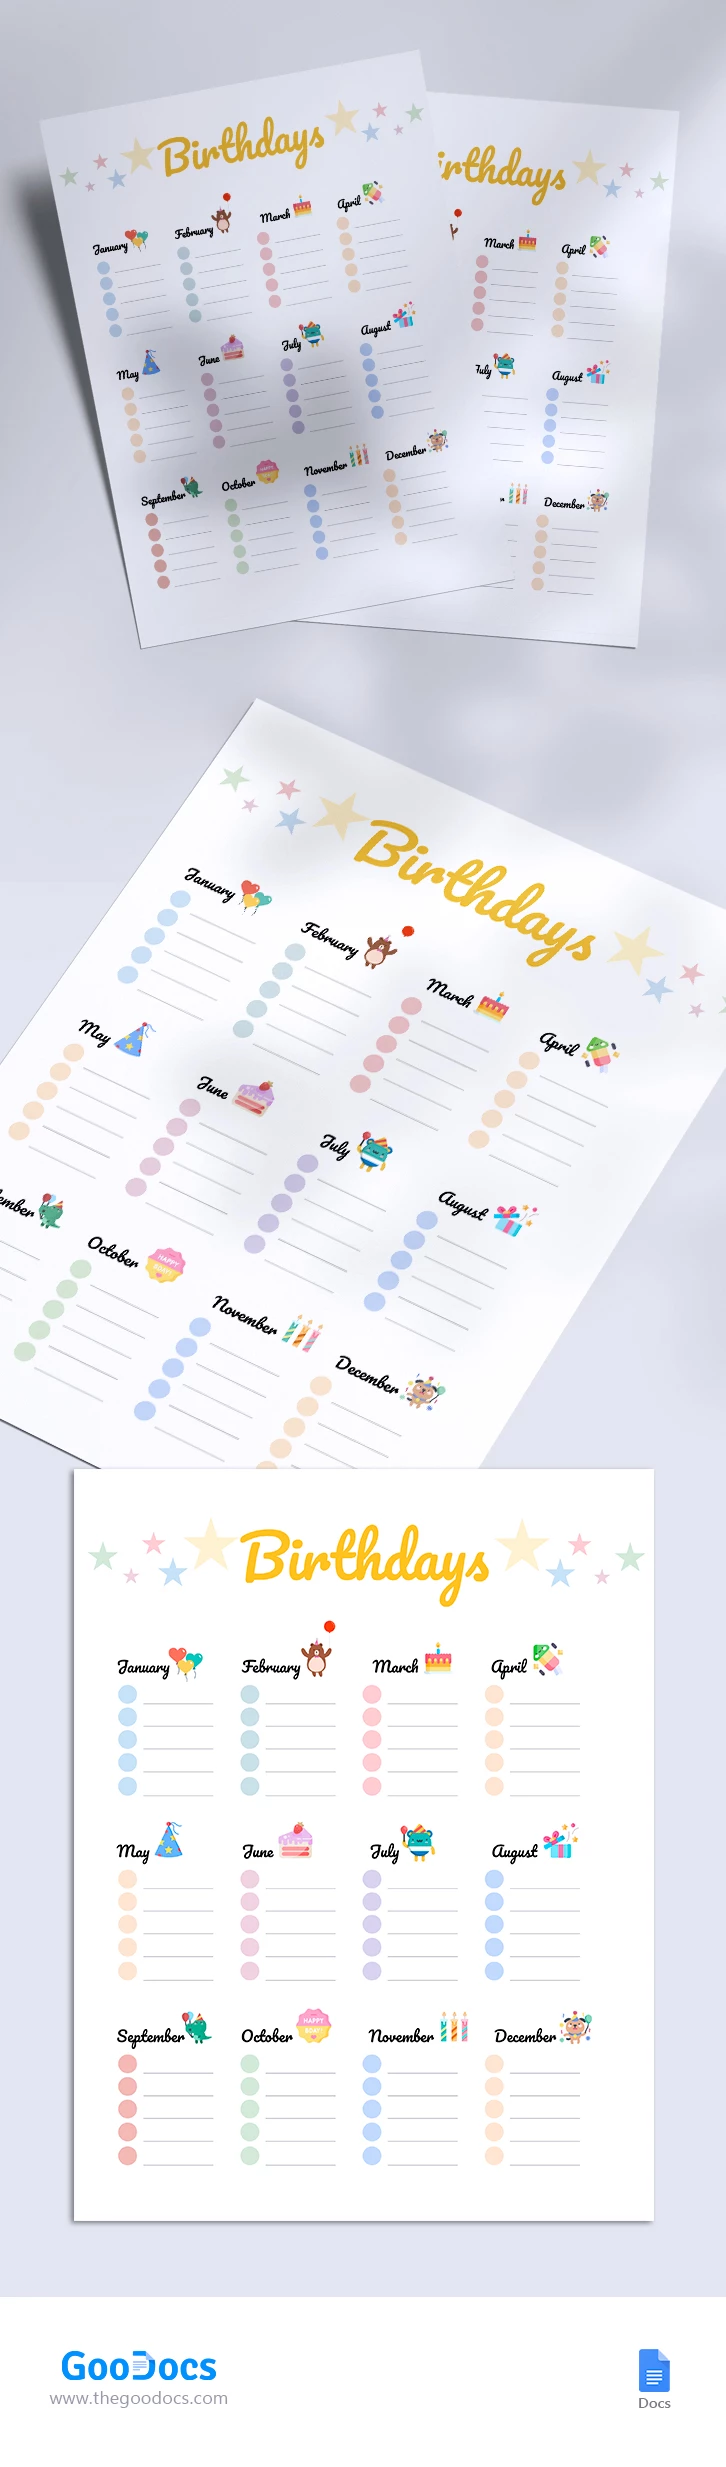 Calendario de Cumpleaños - free Google Docs Template - 10067621